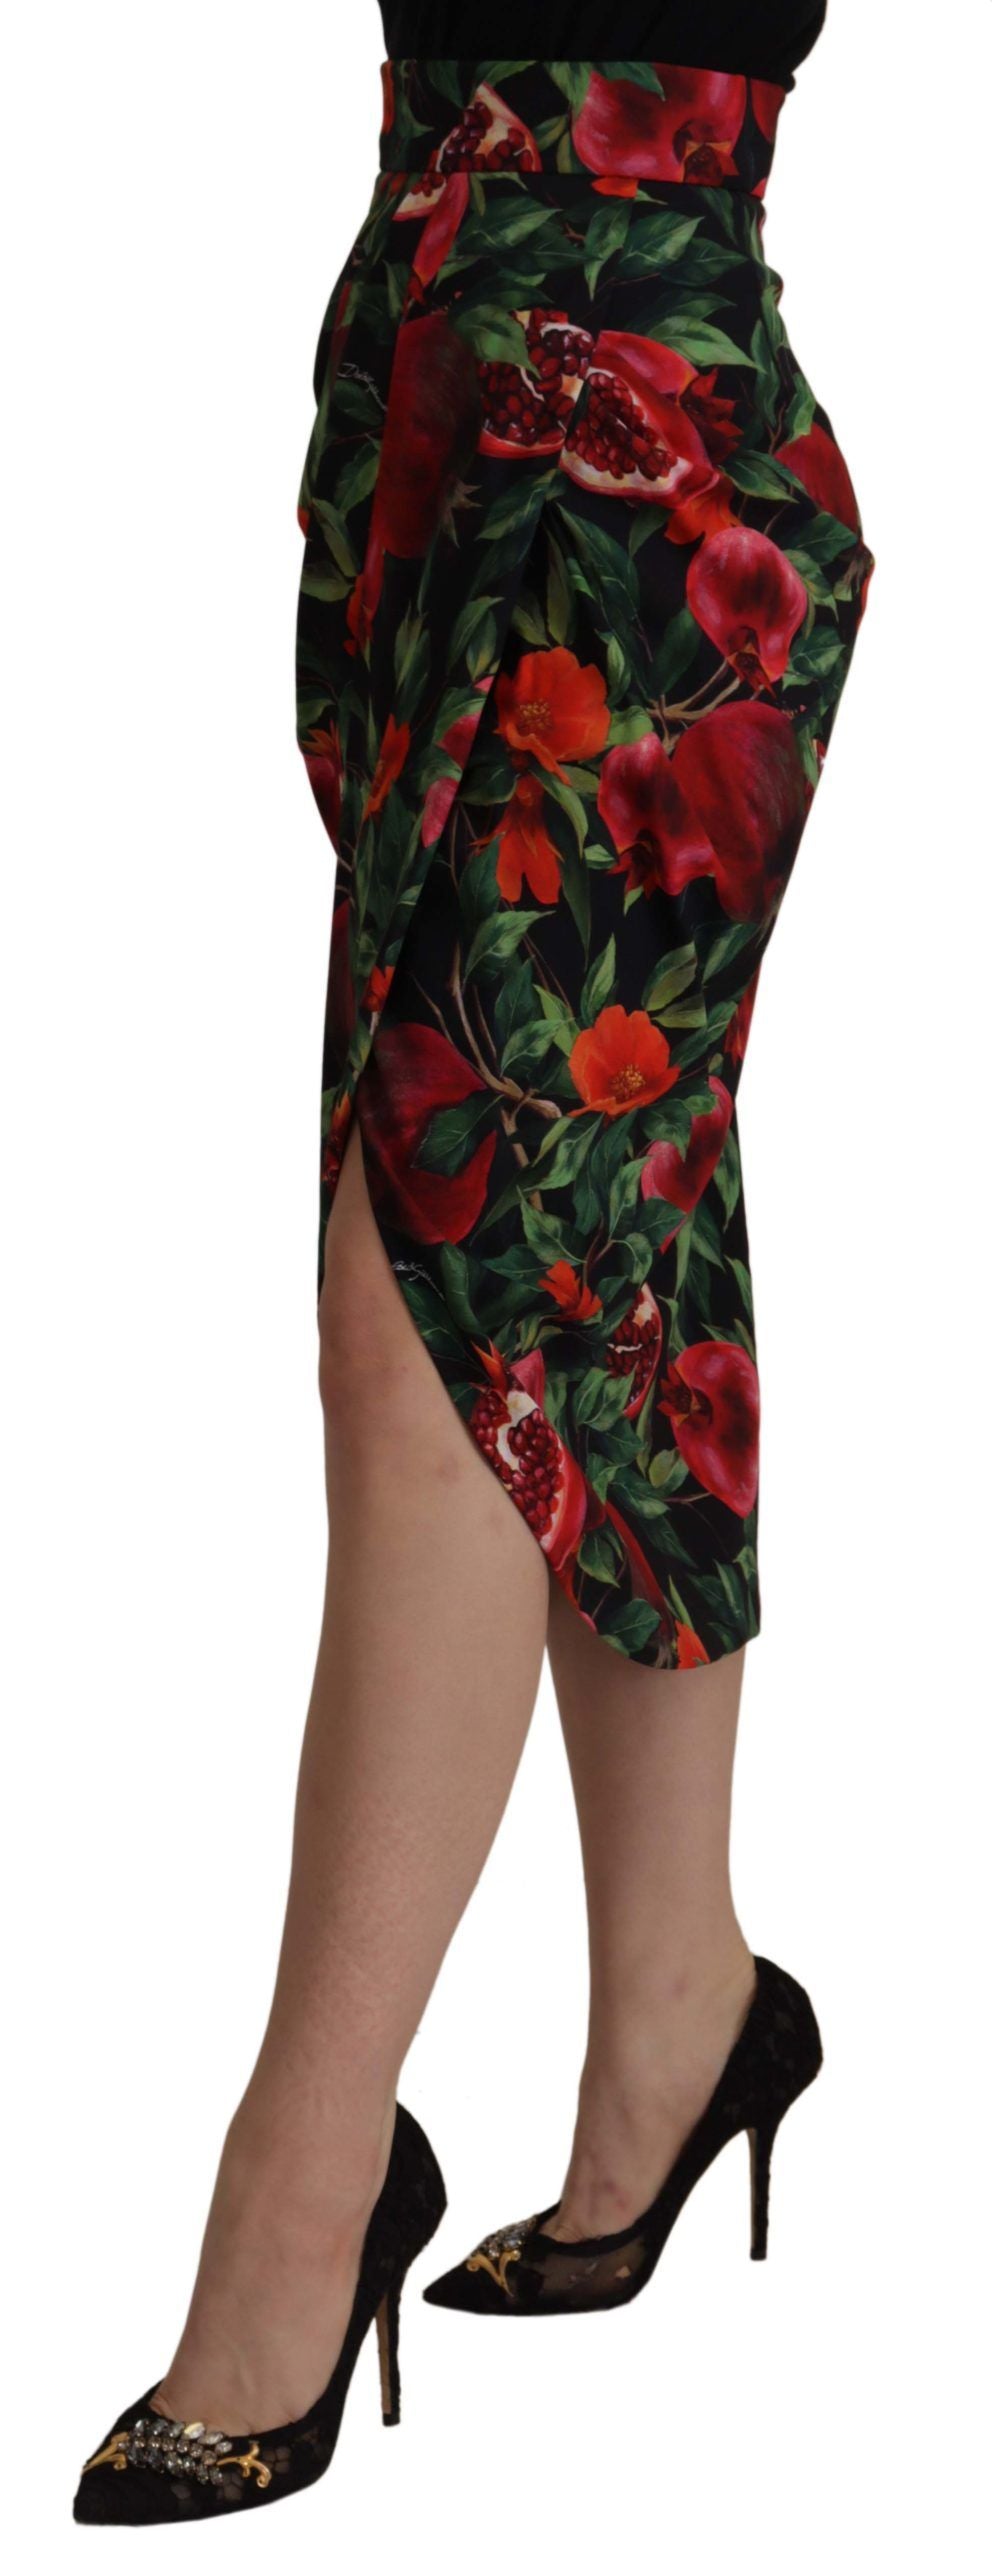 Dolce & Gabbana Black Red Fruit Stretch Wrap Skirt